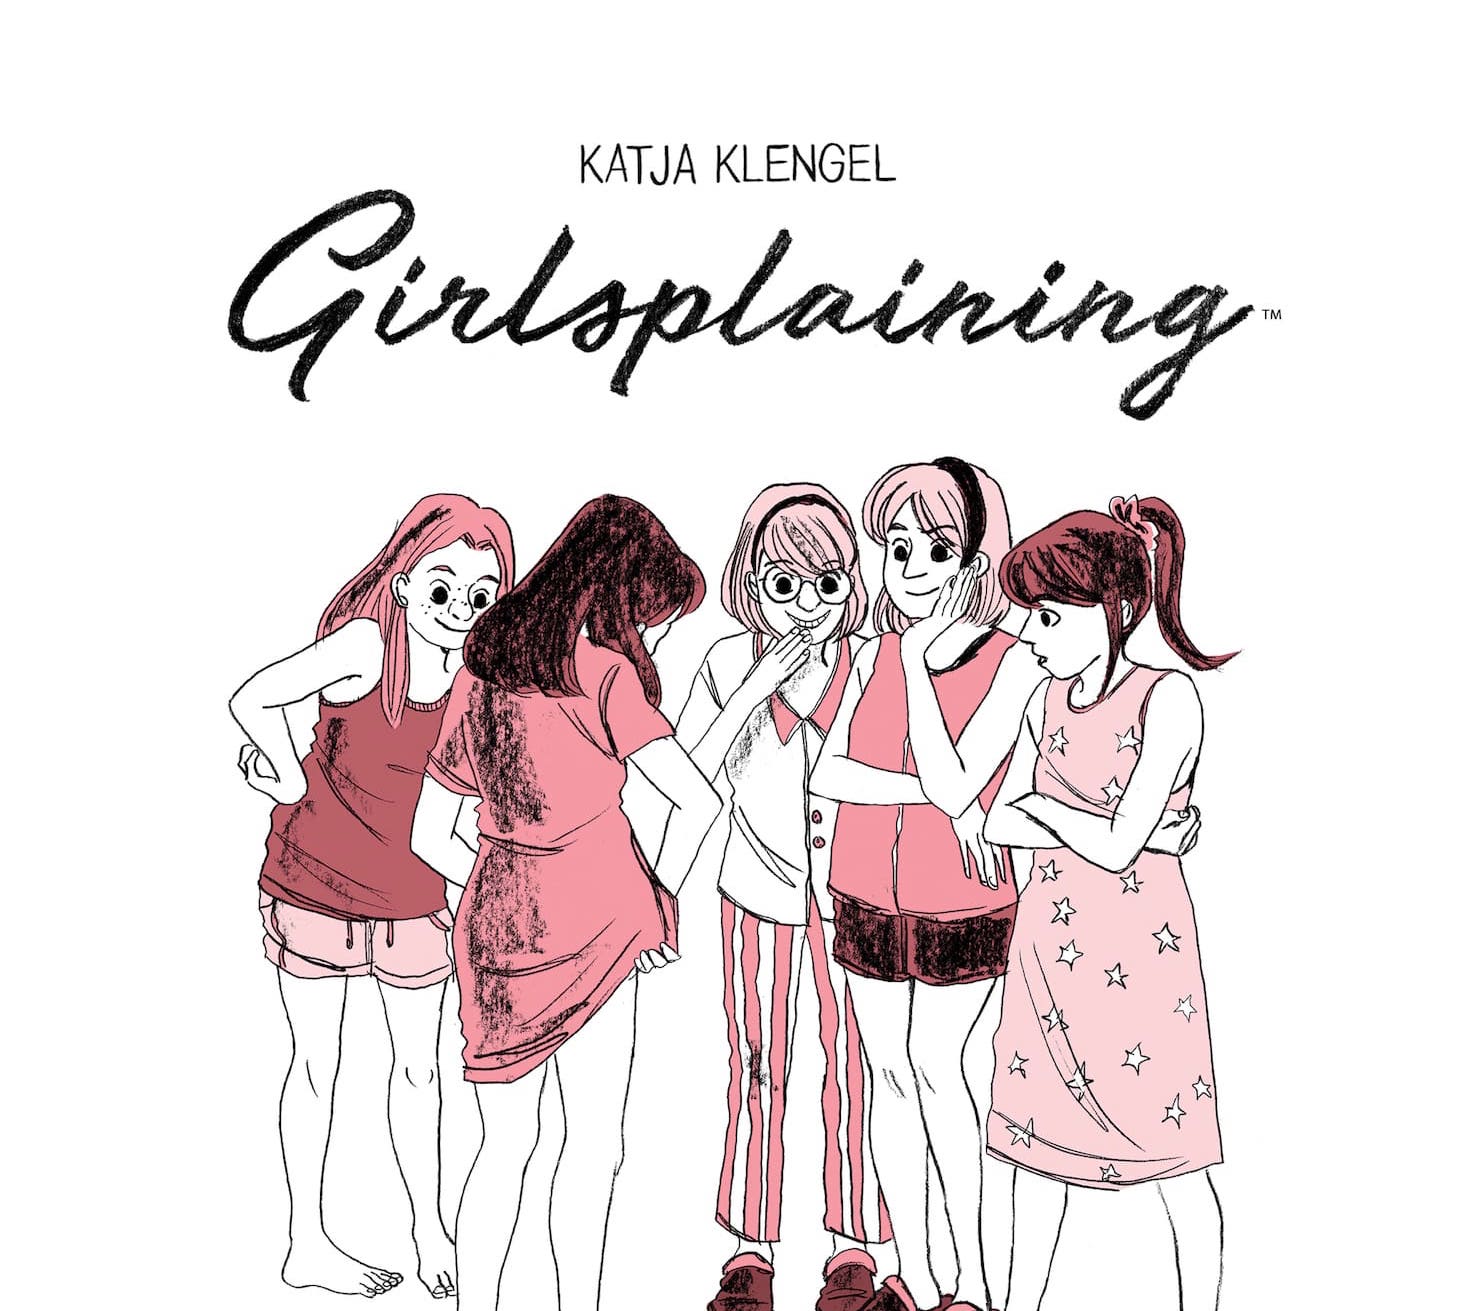 BOOM! Preview: Girlsplaining: A (Sorta) Memoir